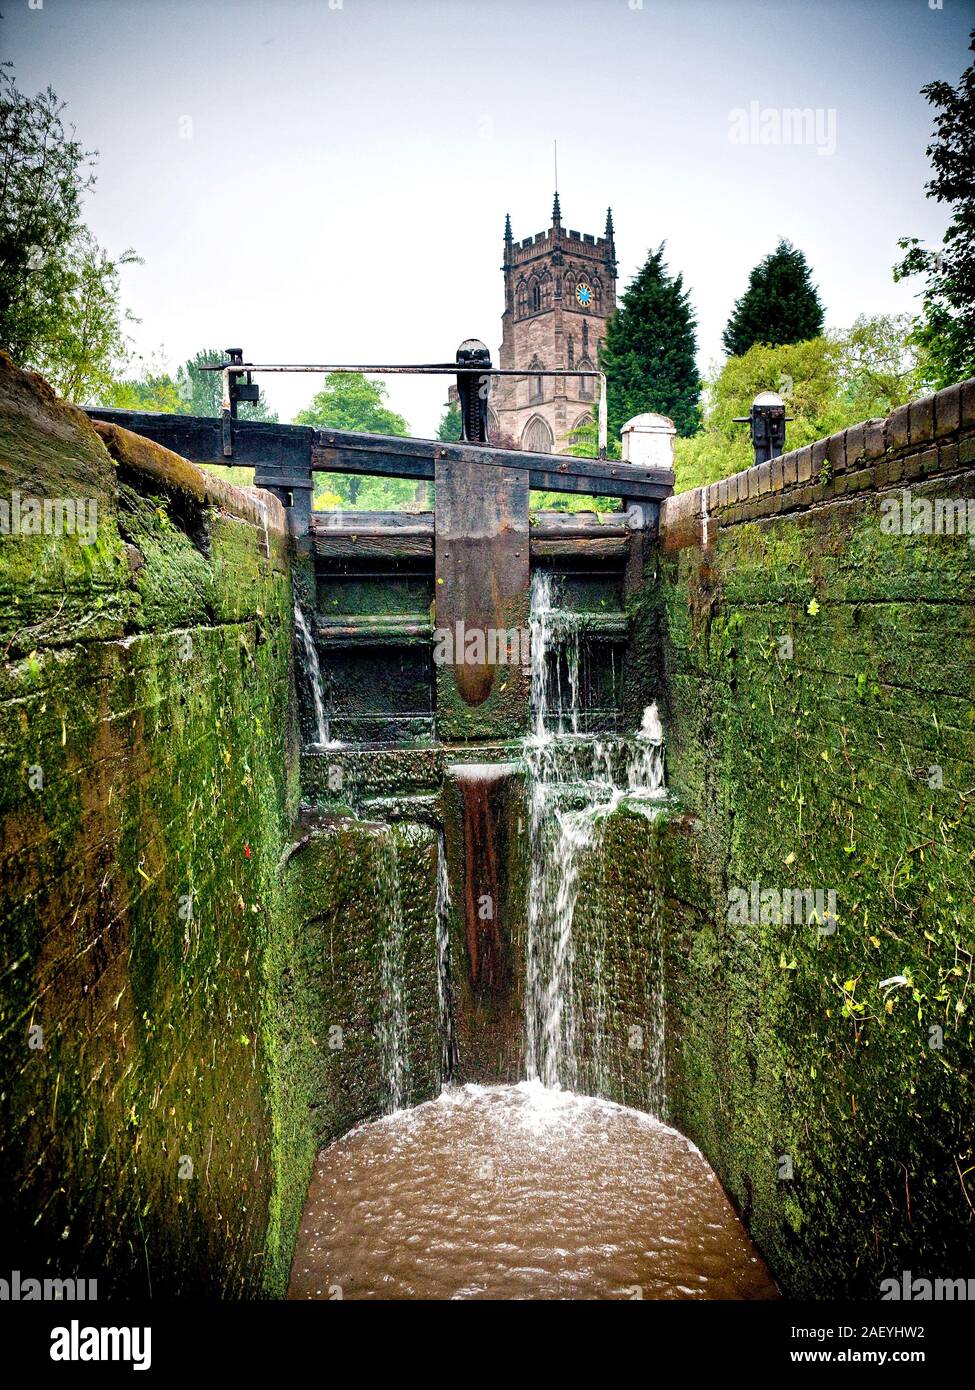 Interior of a narrow Lock with St Mary's Church at Kidderminster, UK Stock Photo